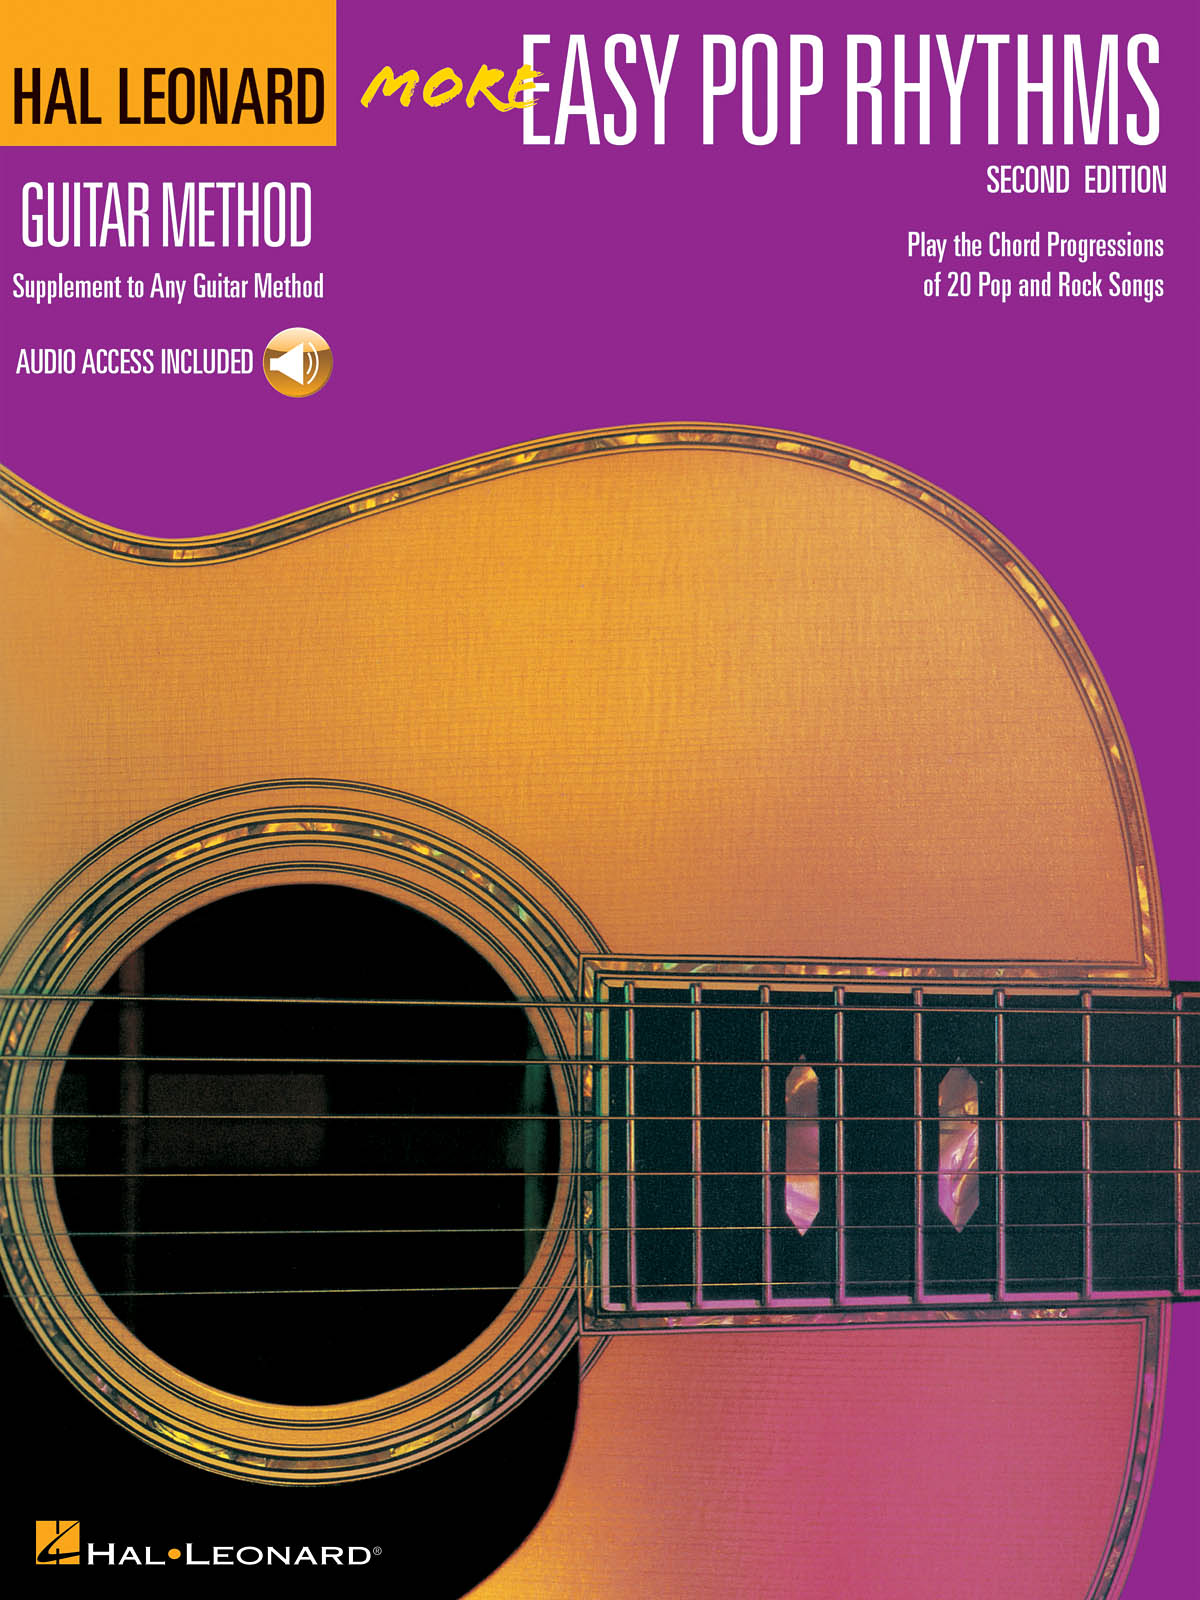 More Easy Pop Rhythms - Third Edition: Guitar Solo: Instrumental Album